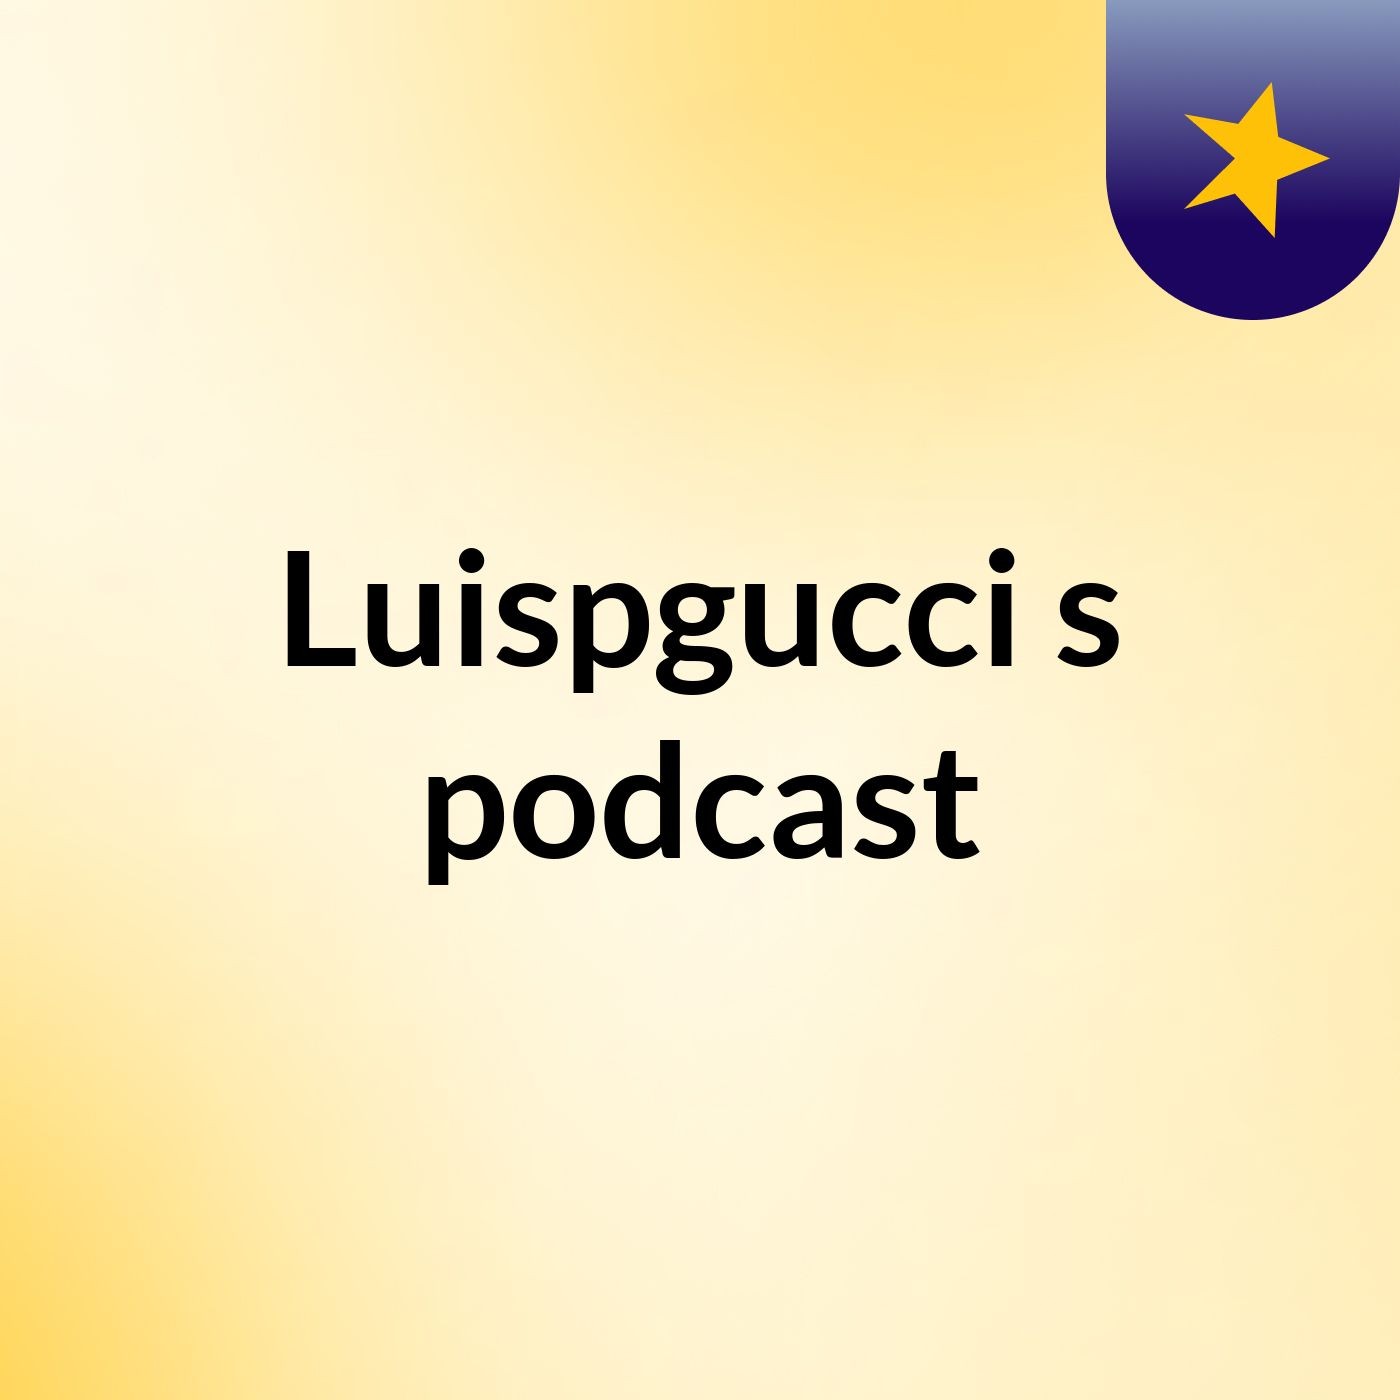 Episode 3 - Luispgucci's podcast